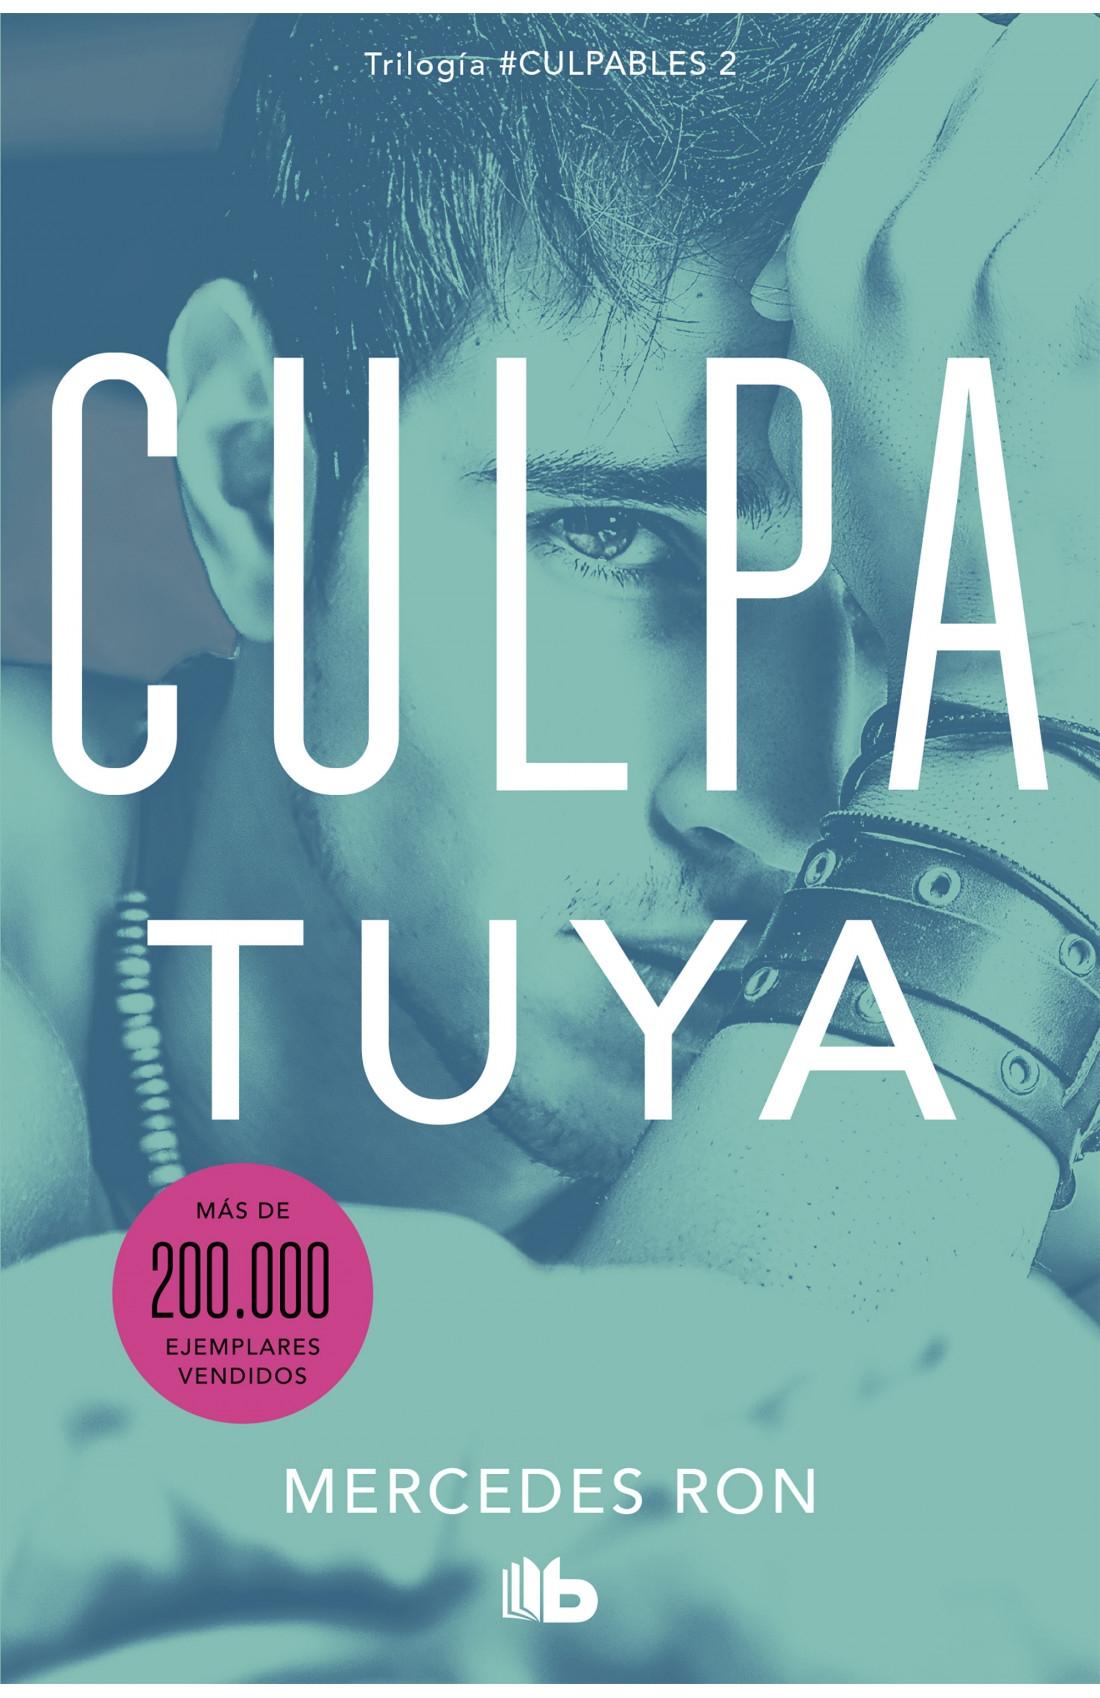 Culpa Tuya "Trilogía Culpables 2"